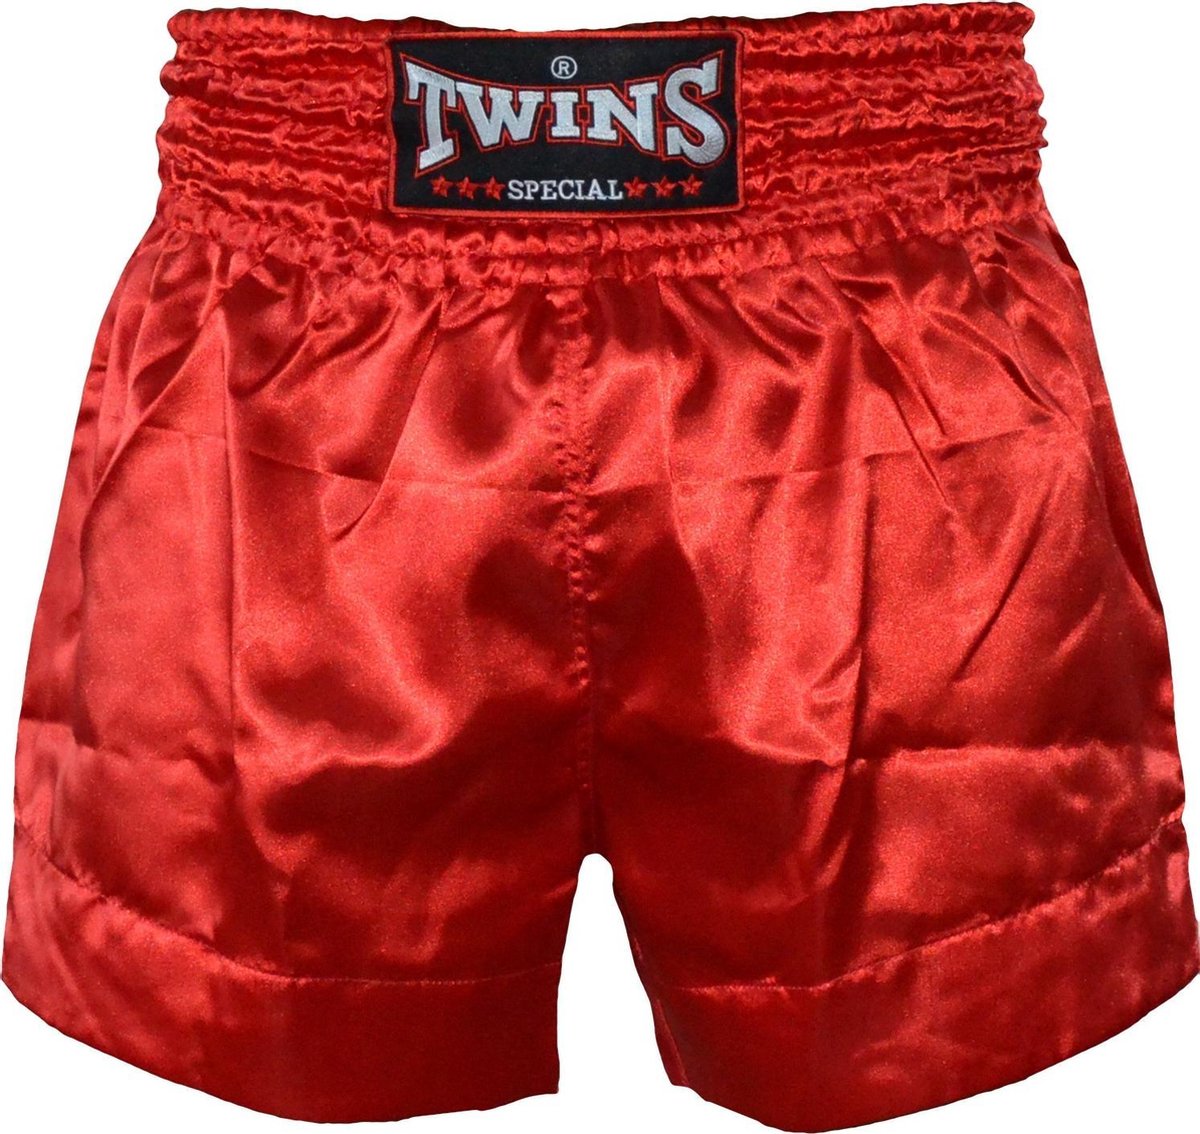 Twins Kickboks Shorts Muay Thai TTE D3 Rood Kies hier uw maat Twins Muay Thai Shorts: XL - Jeans maat 34